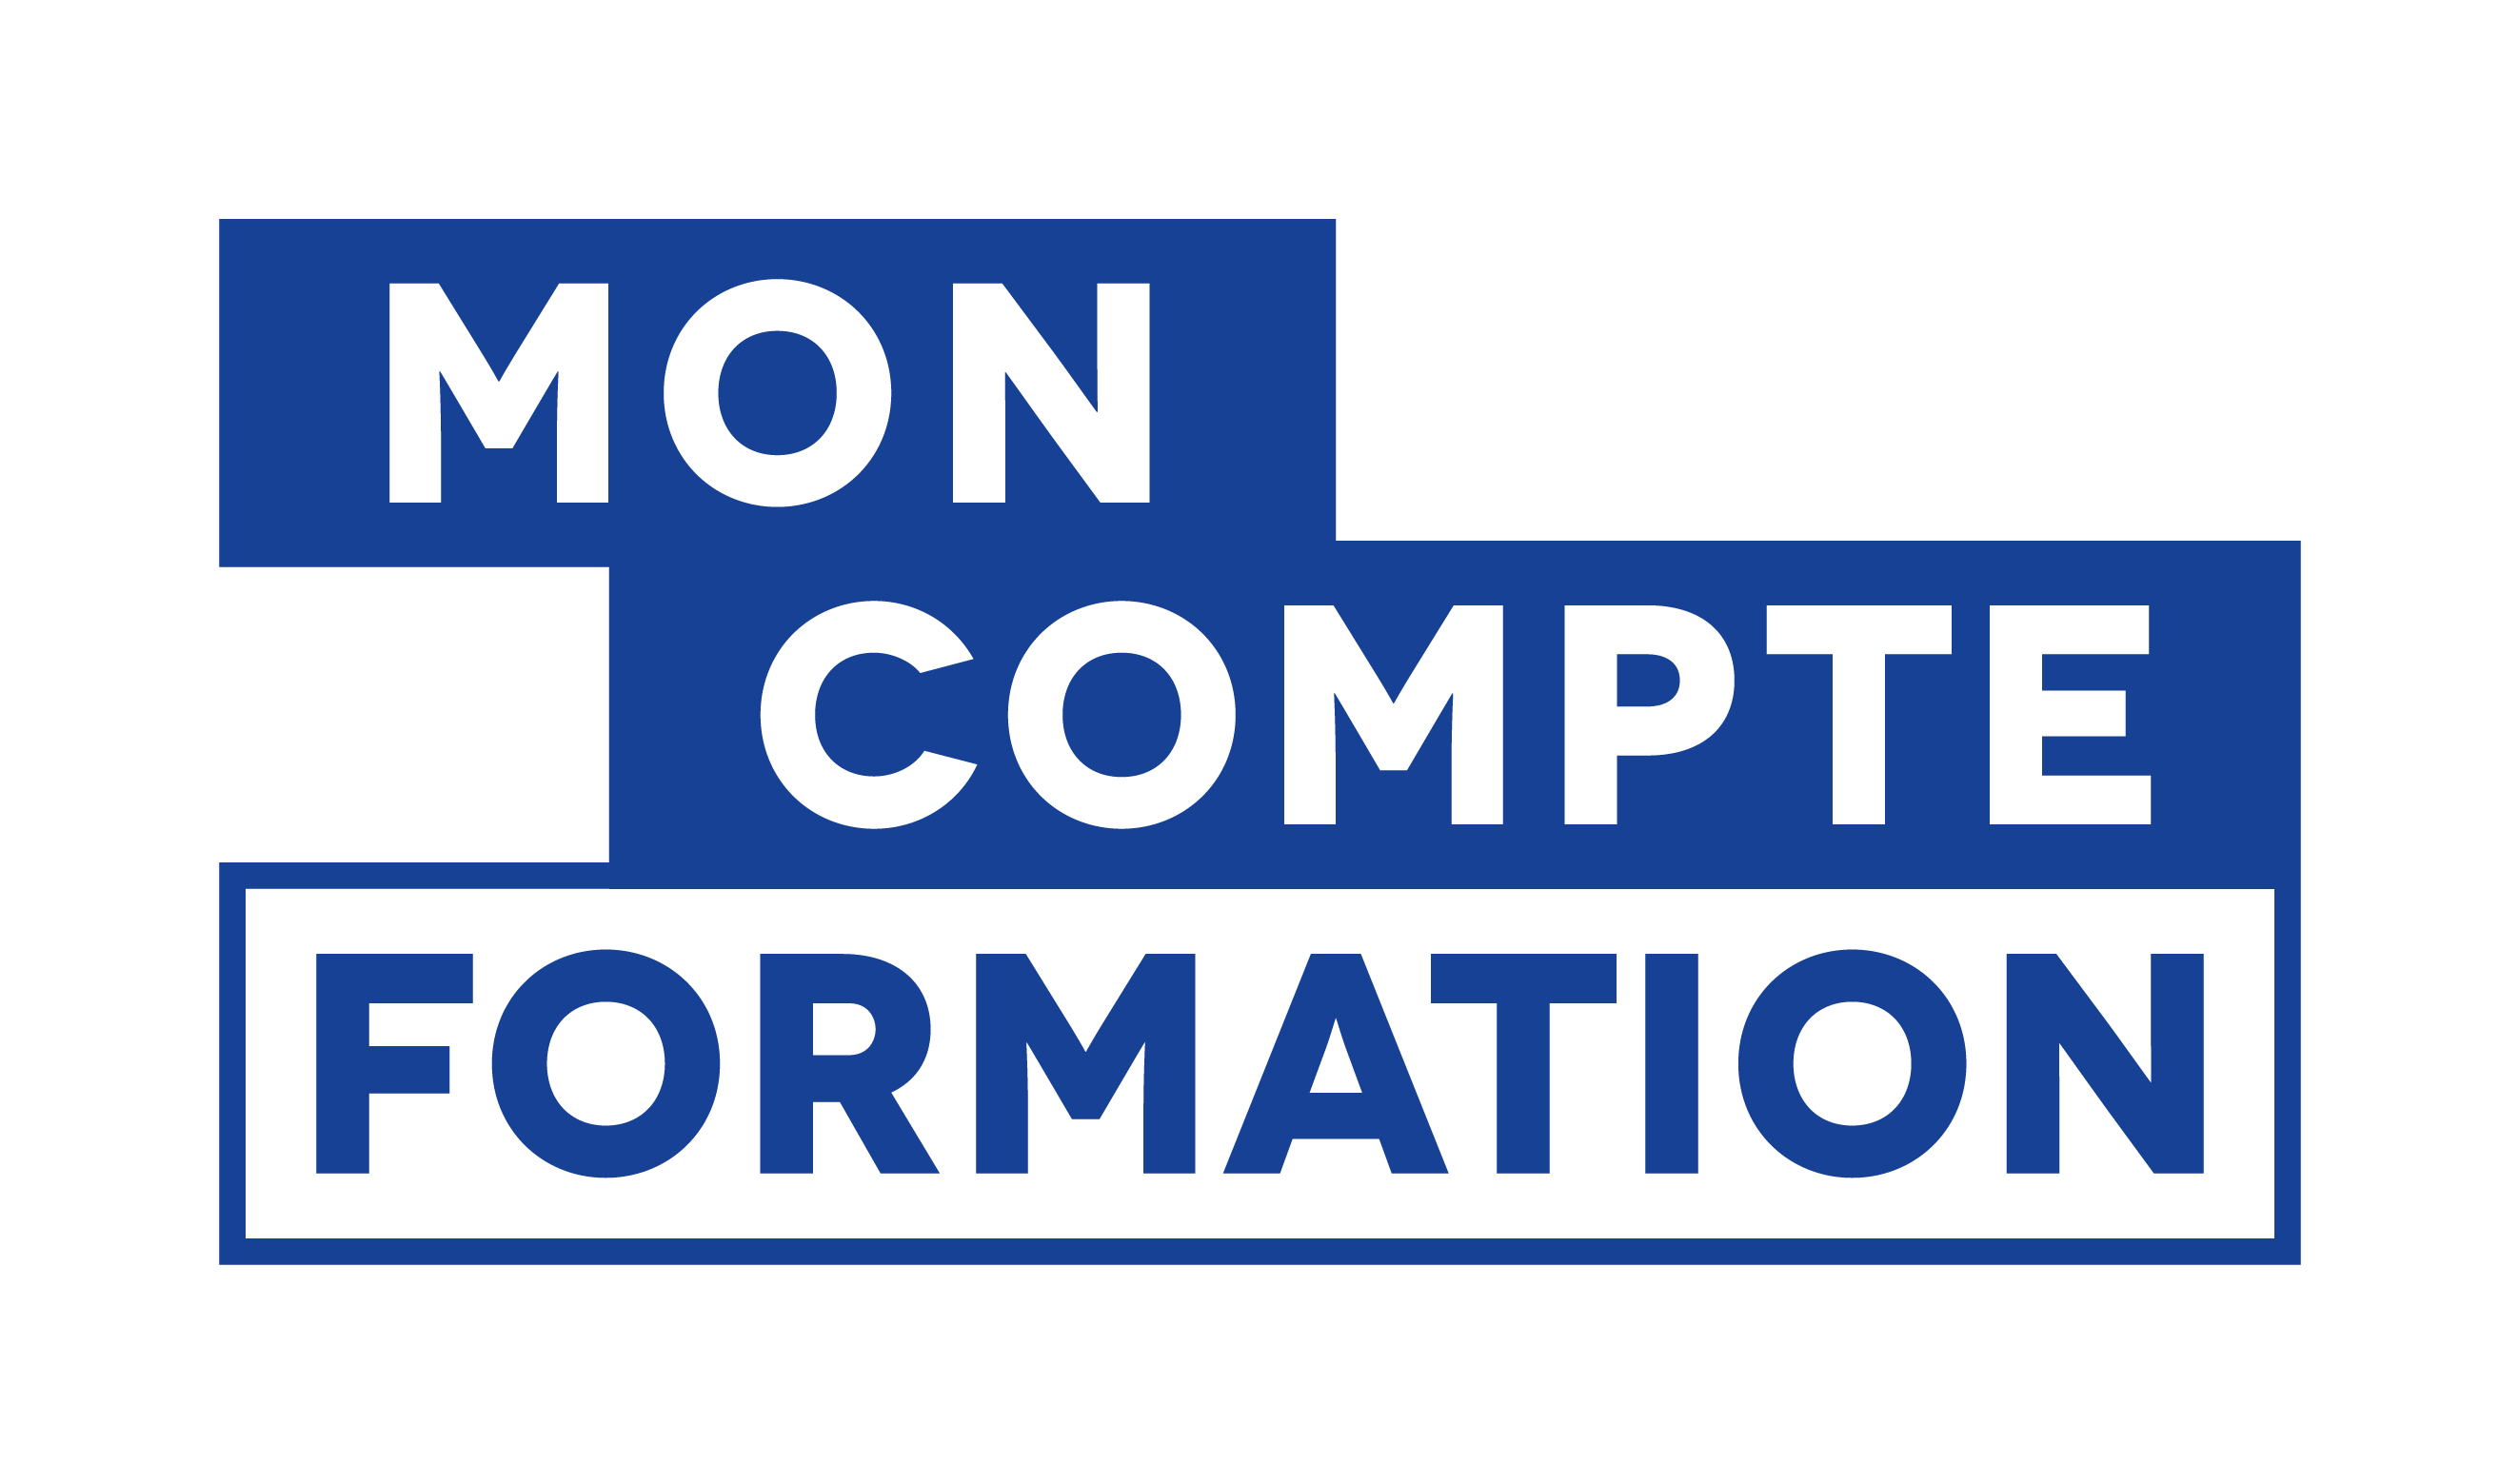 moncompteformation-logo